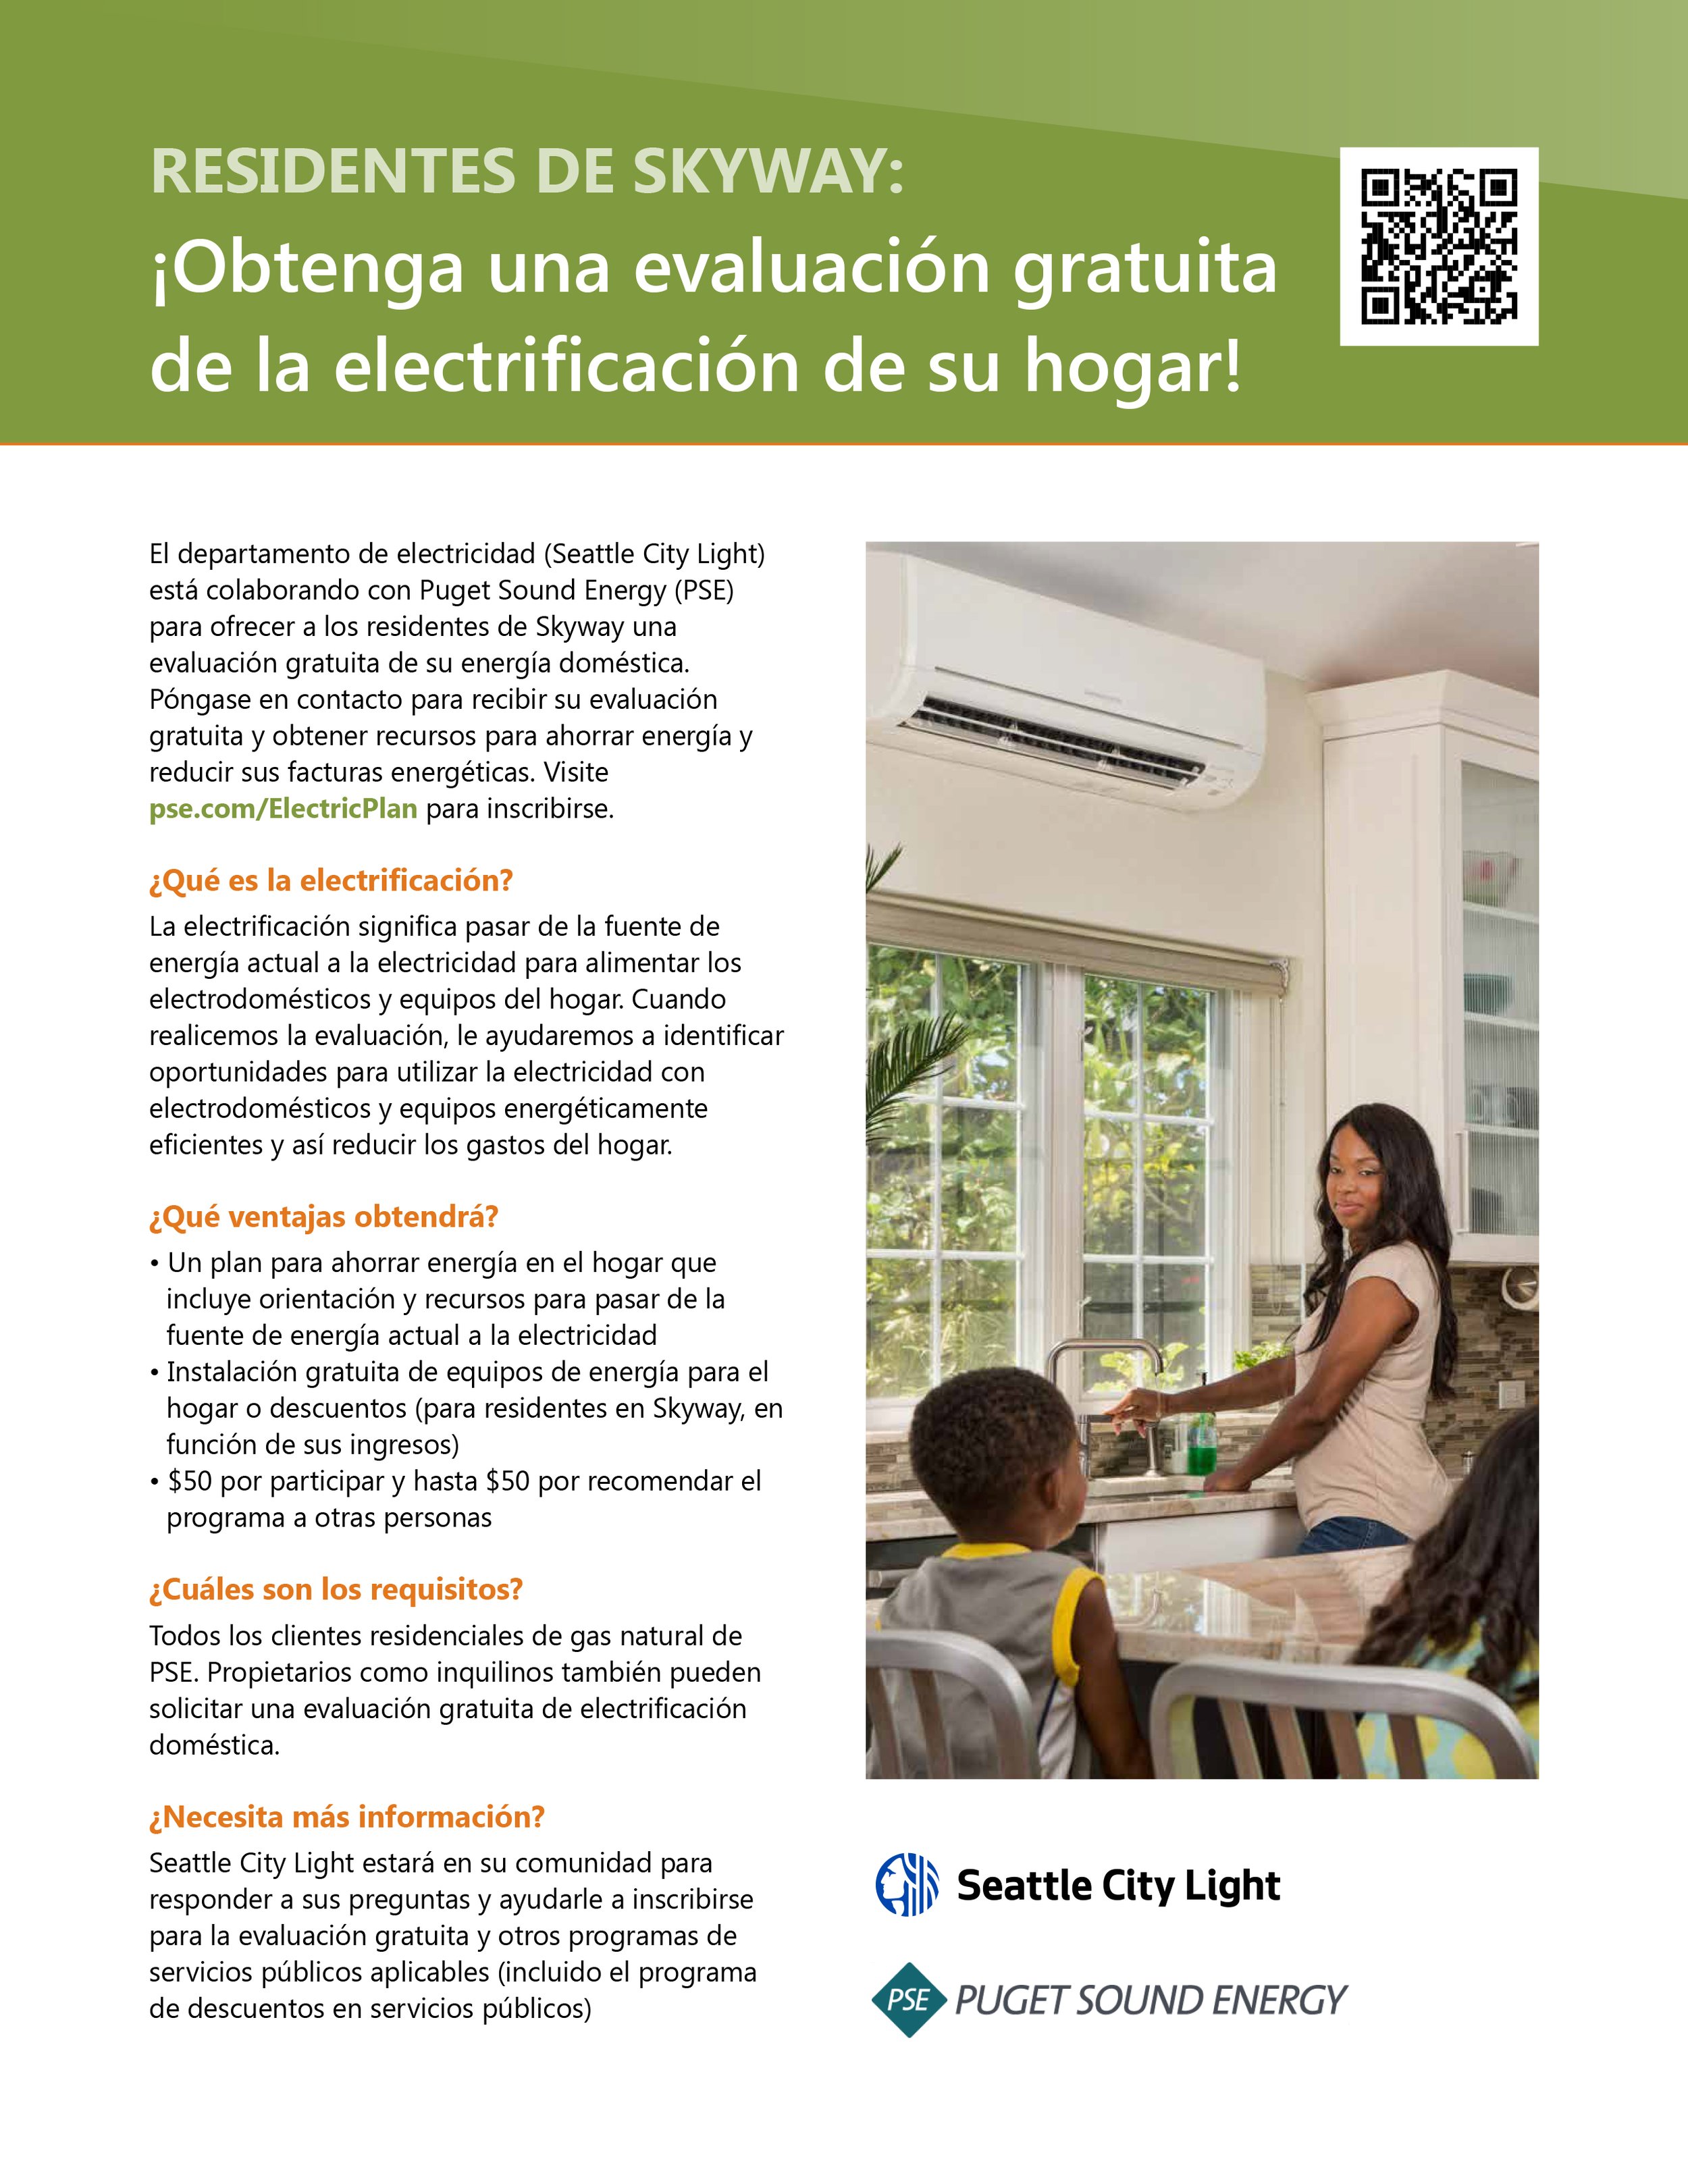 HomeElectrificationAssessment_Skyway_Spanish.jpg